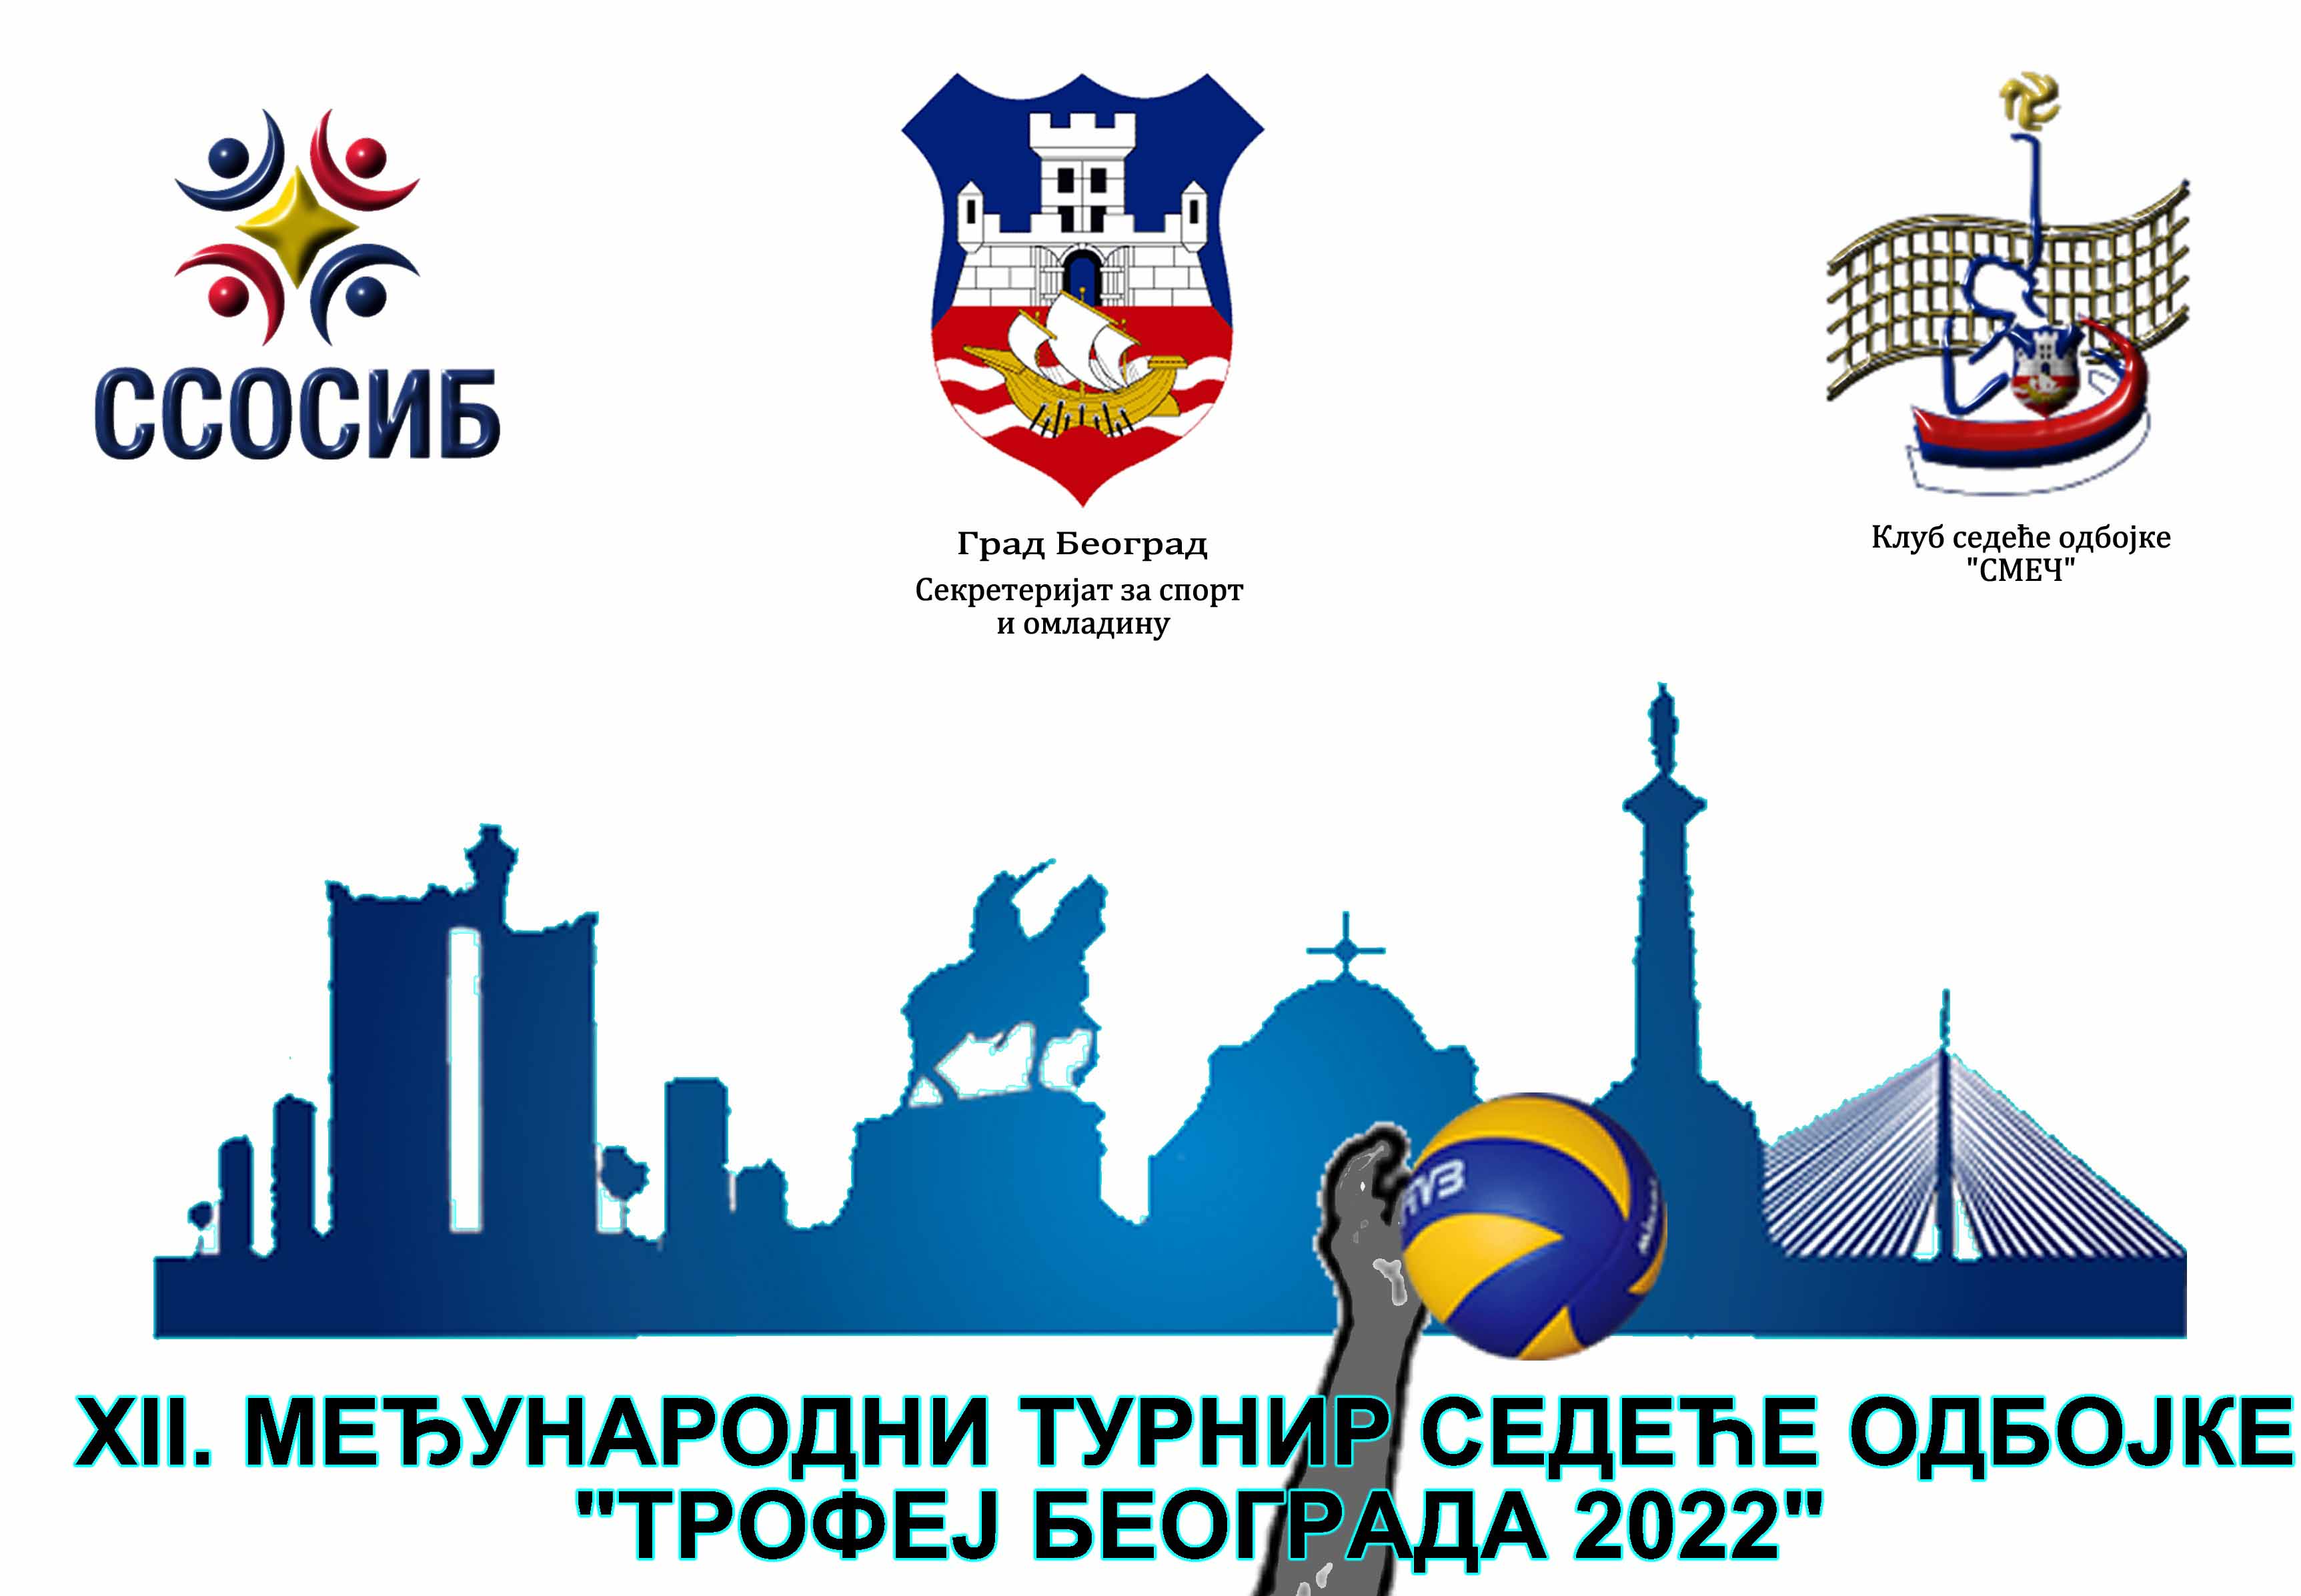 Turnir sedeće odbojke Beograd 2022